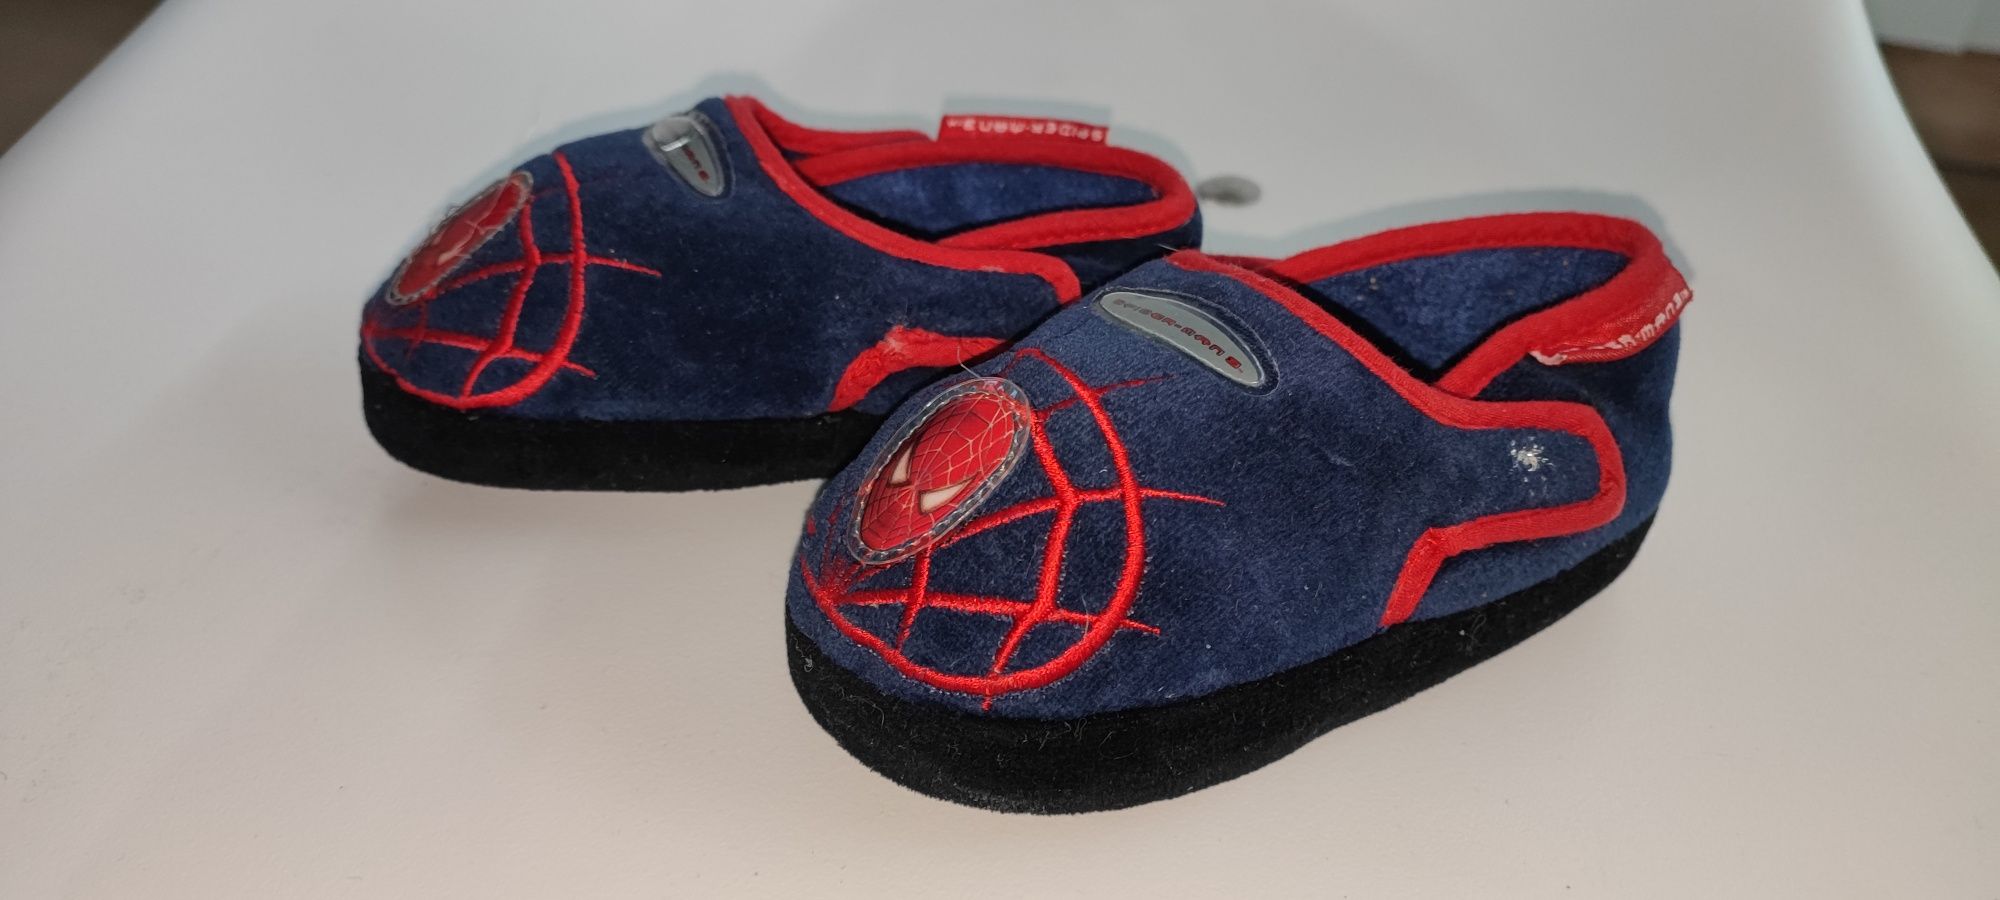 Pantofle kapcie chłopięce Spider-Man rozmiar 23-24